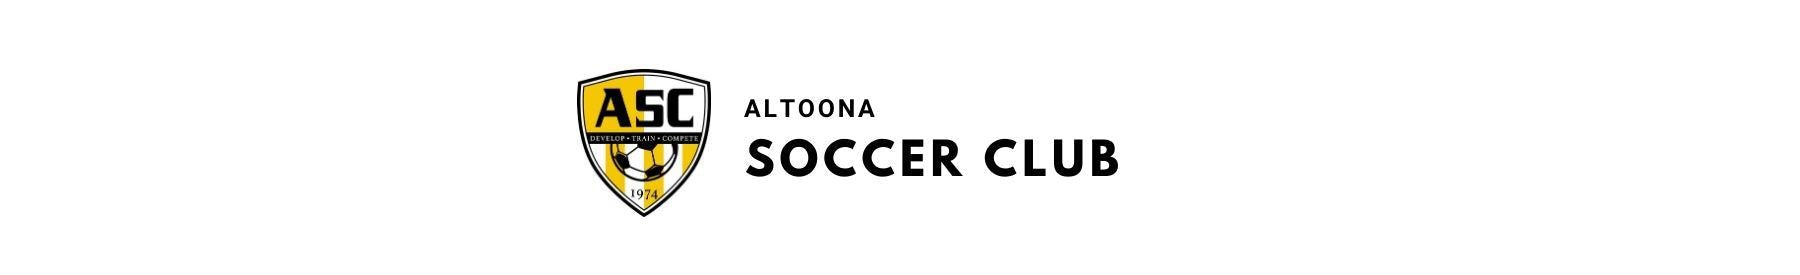 Altoona Soccer Club Collection | Goal Kick Soccer